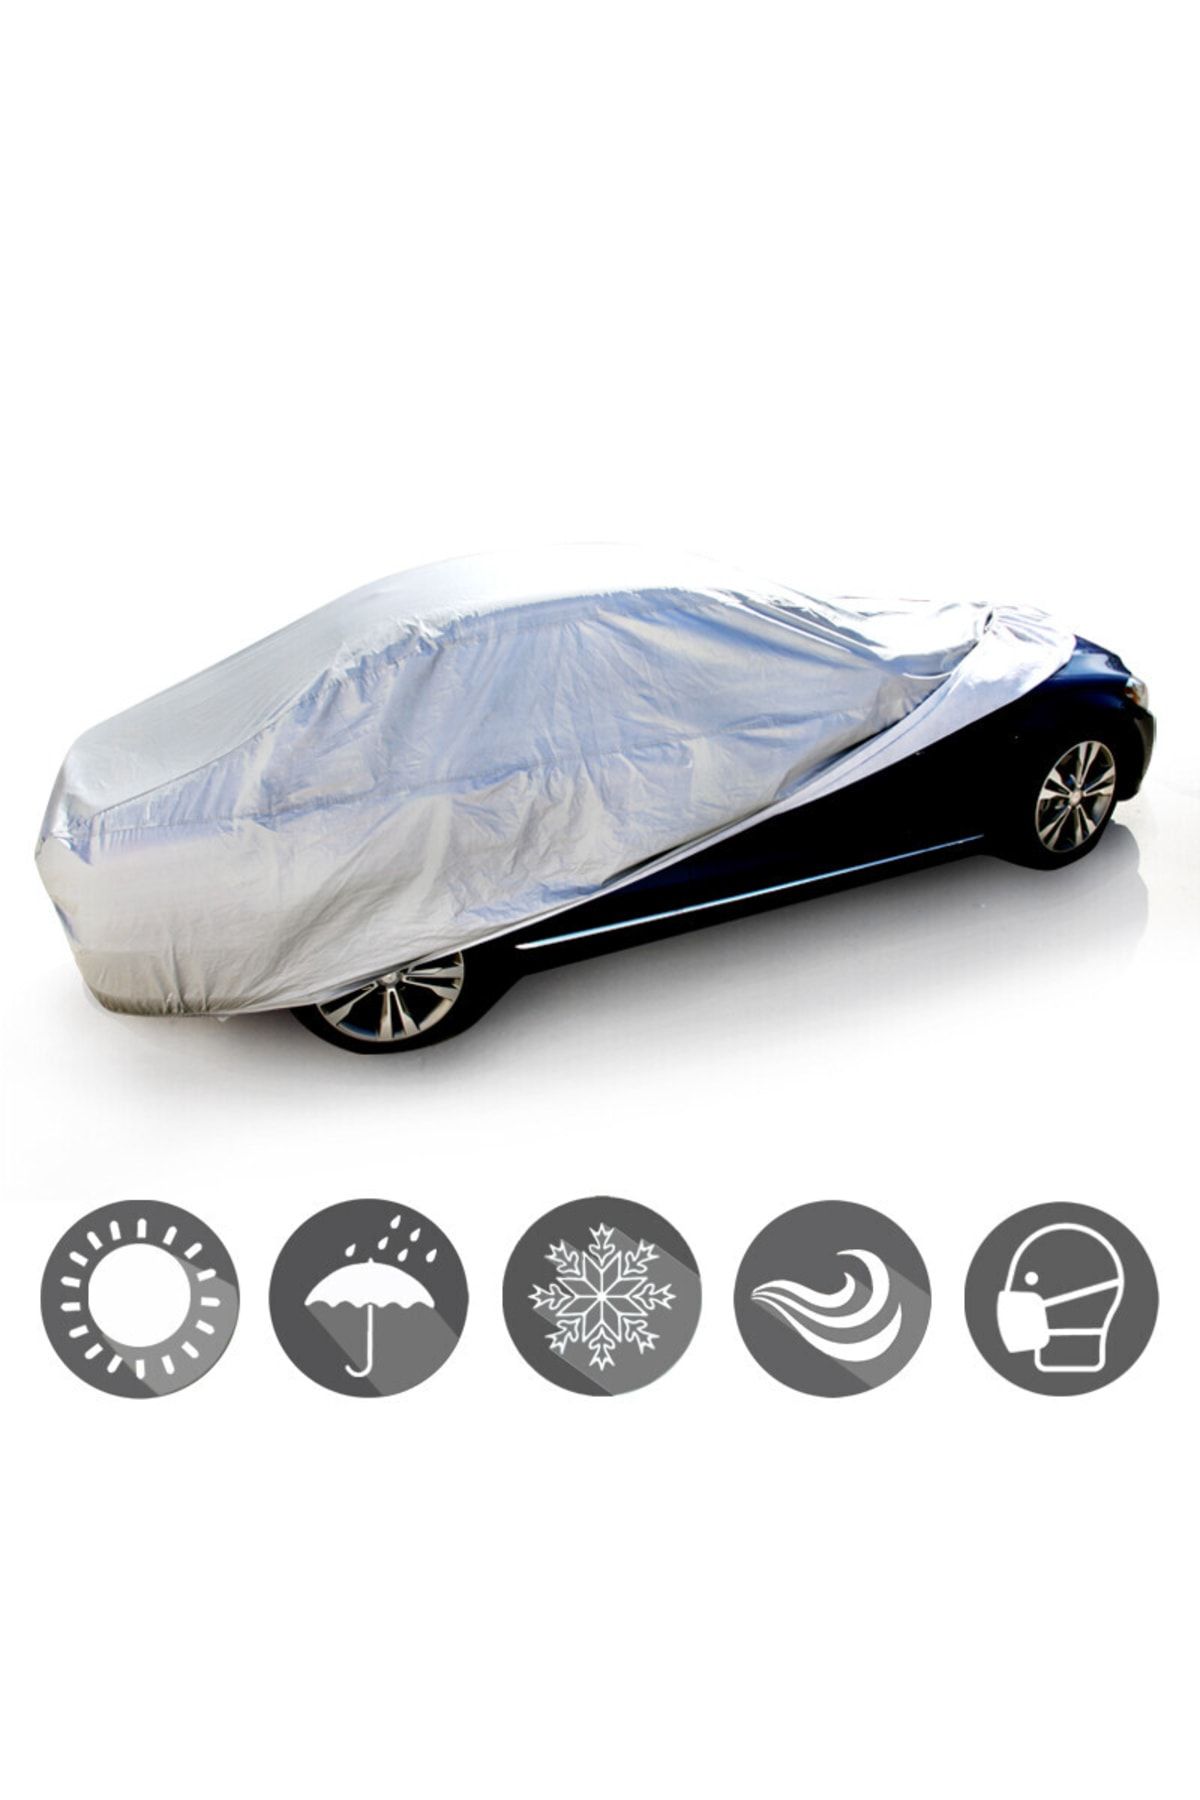 AutoEN Dacia Sandero Stepway 2016 Model Premium Quality Car Cover, Car Tent  - Trendyol